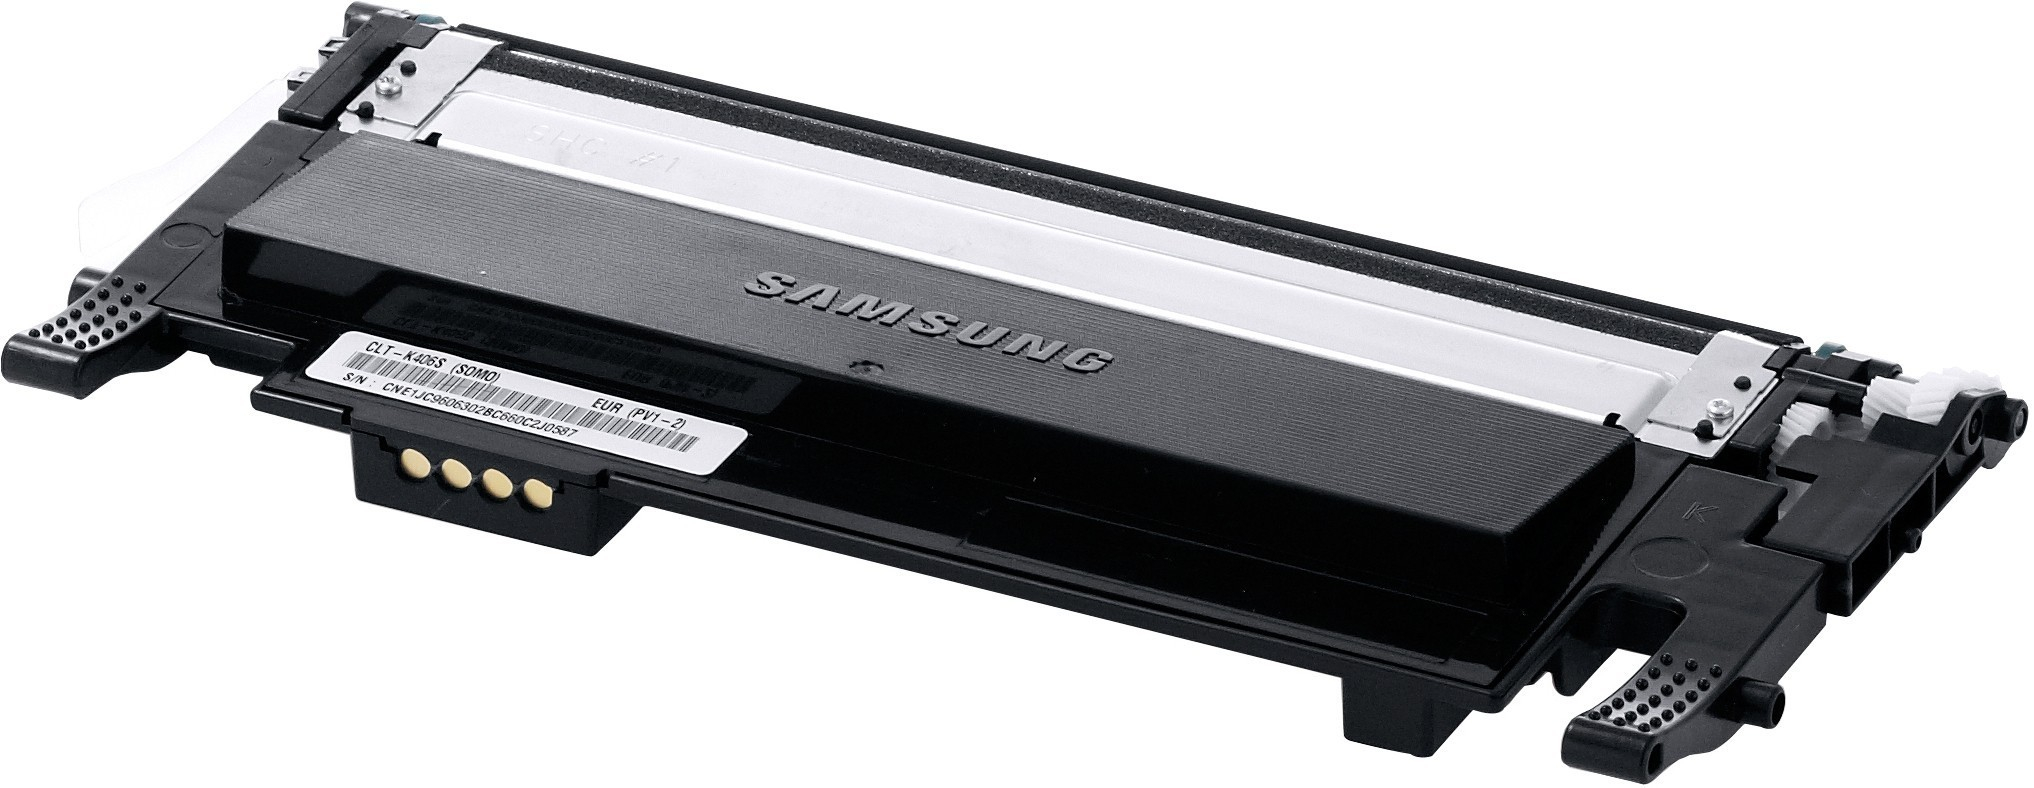 Original Toner Samsung CLX-3300 Series (SU118A / CLT-K406S) Schwarz